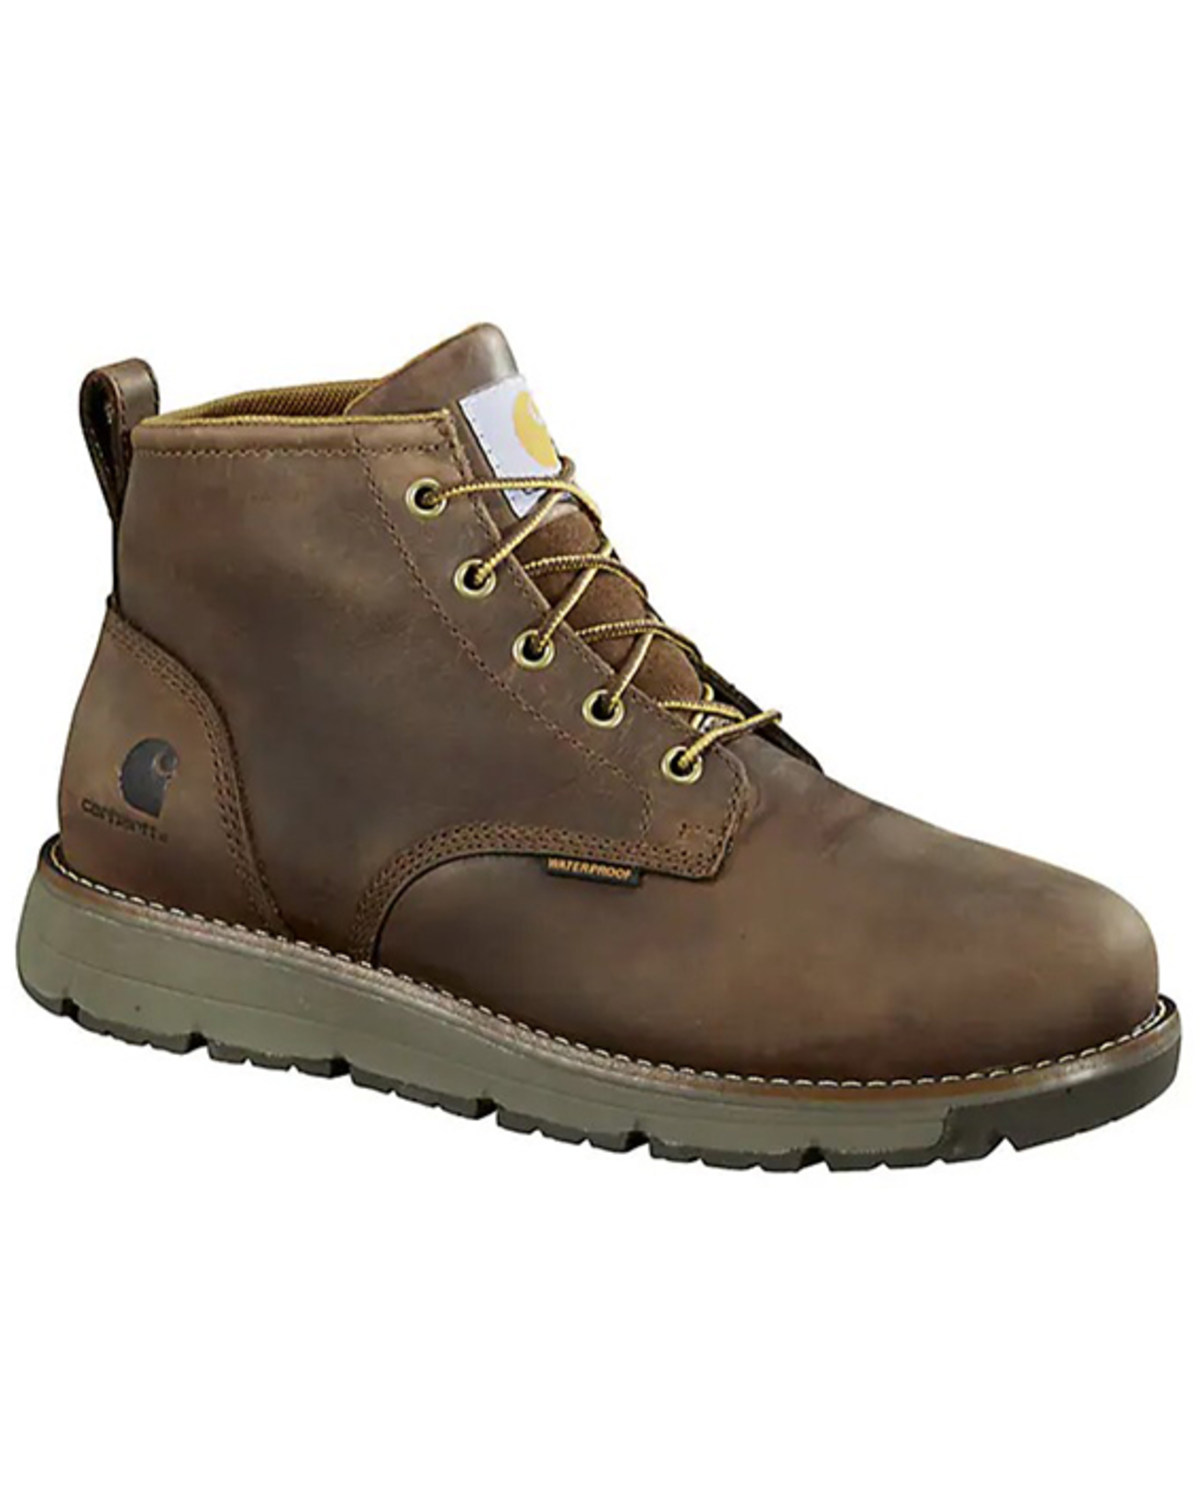 Carhartt Men's Millbrook 5" Waterproof Work Boots - Steel Toe